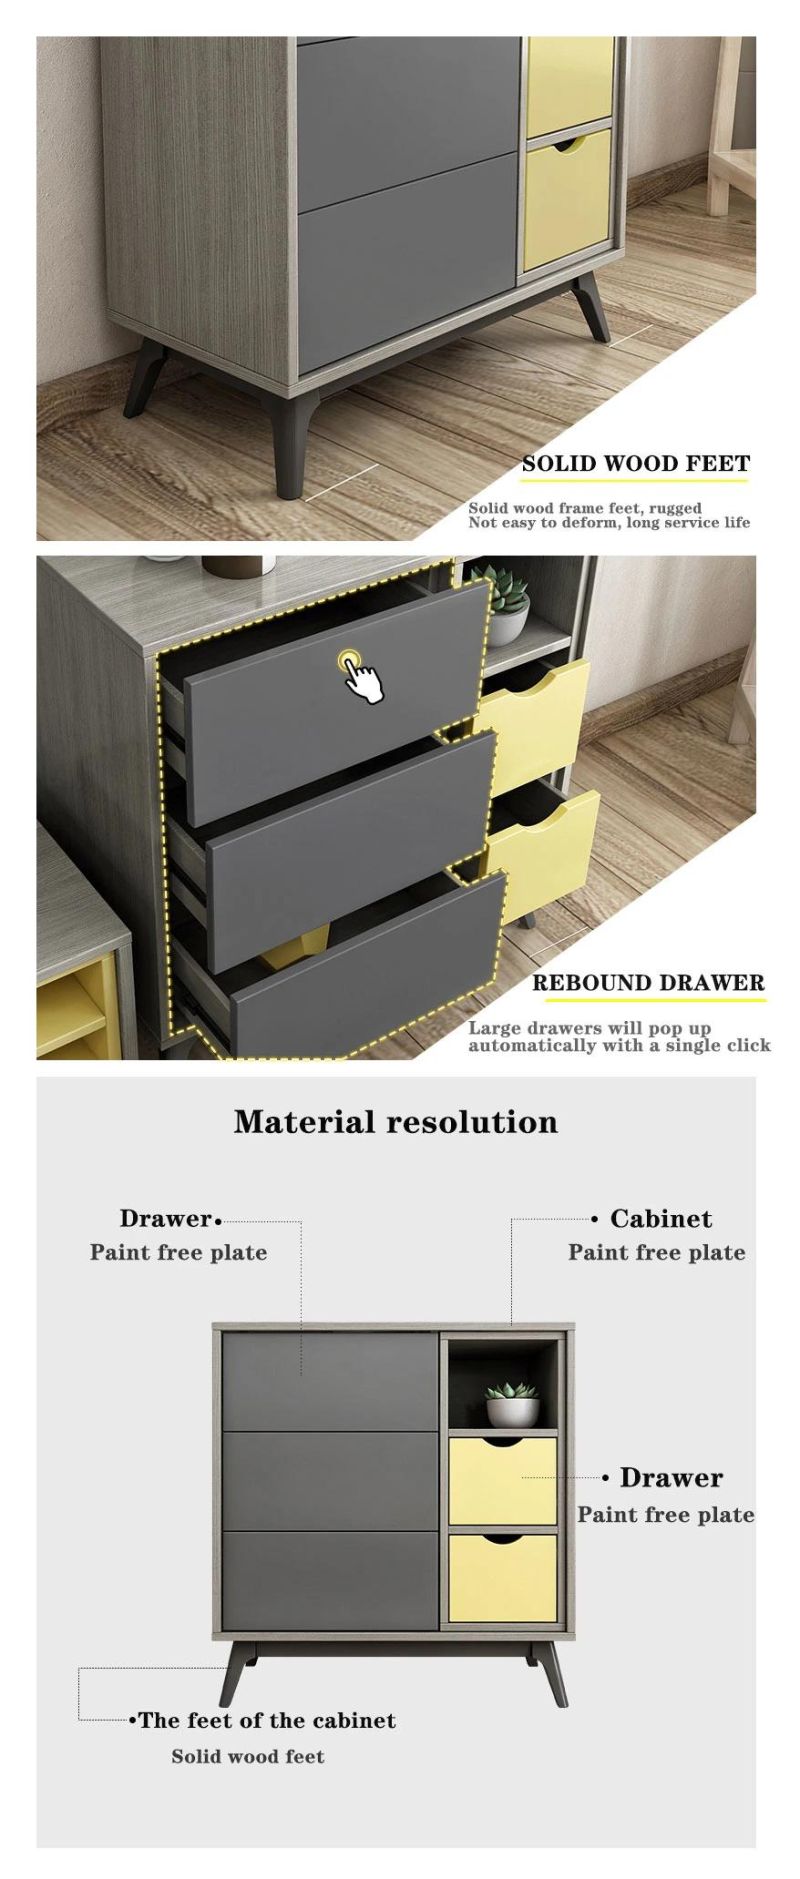 Modern Home Bedroom Wooden Living Room Furniture Designs TV Stand Cabinets